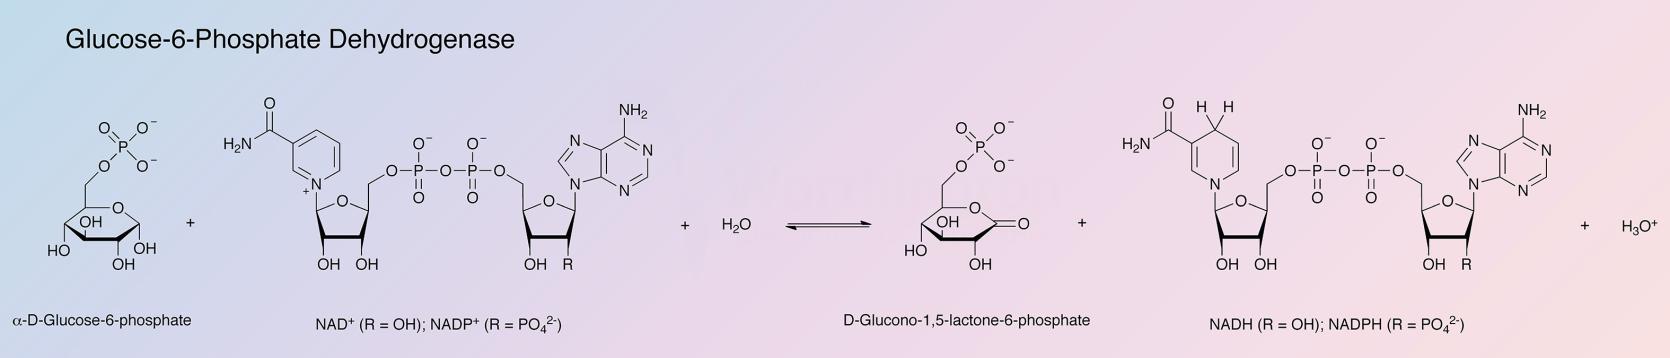 Glucose-6-Phosphate Dehydrogenase Enzymatic Reaction